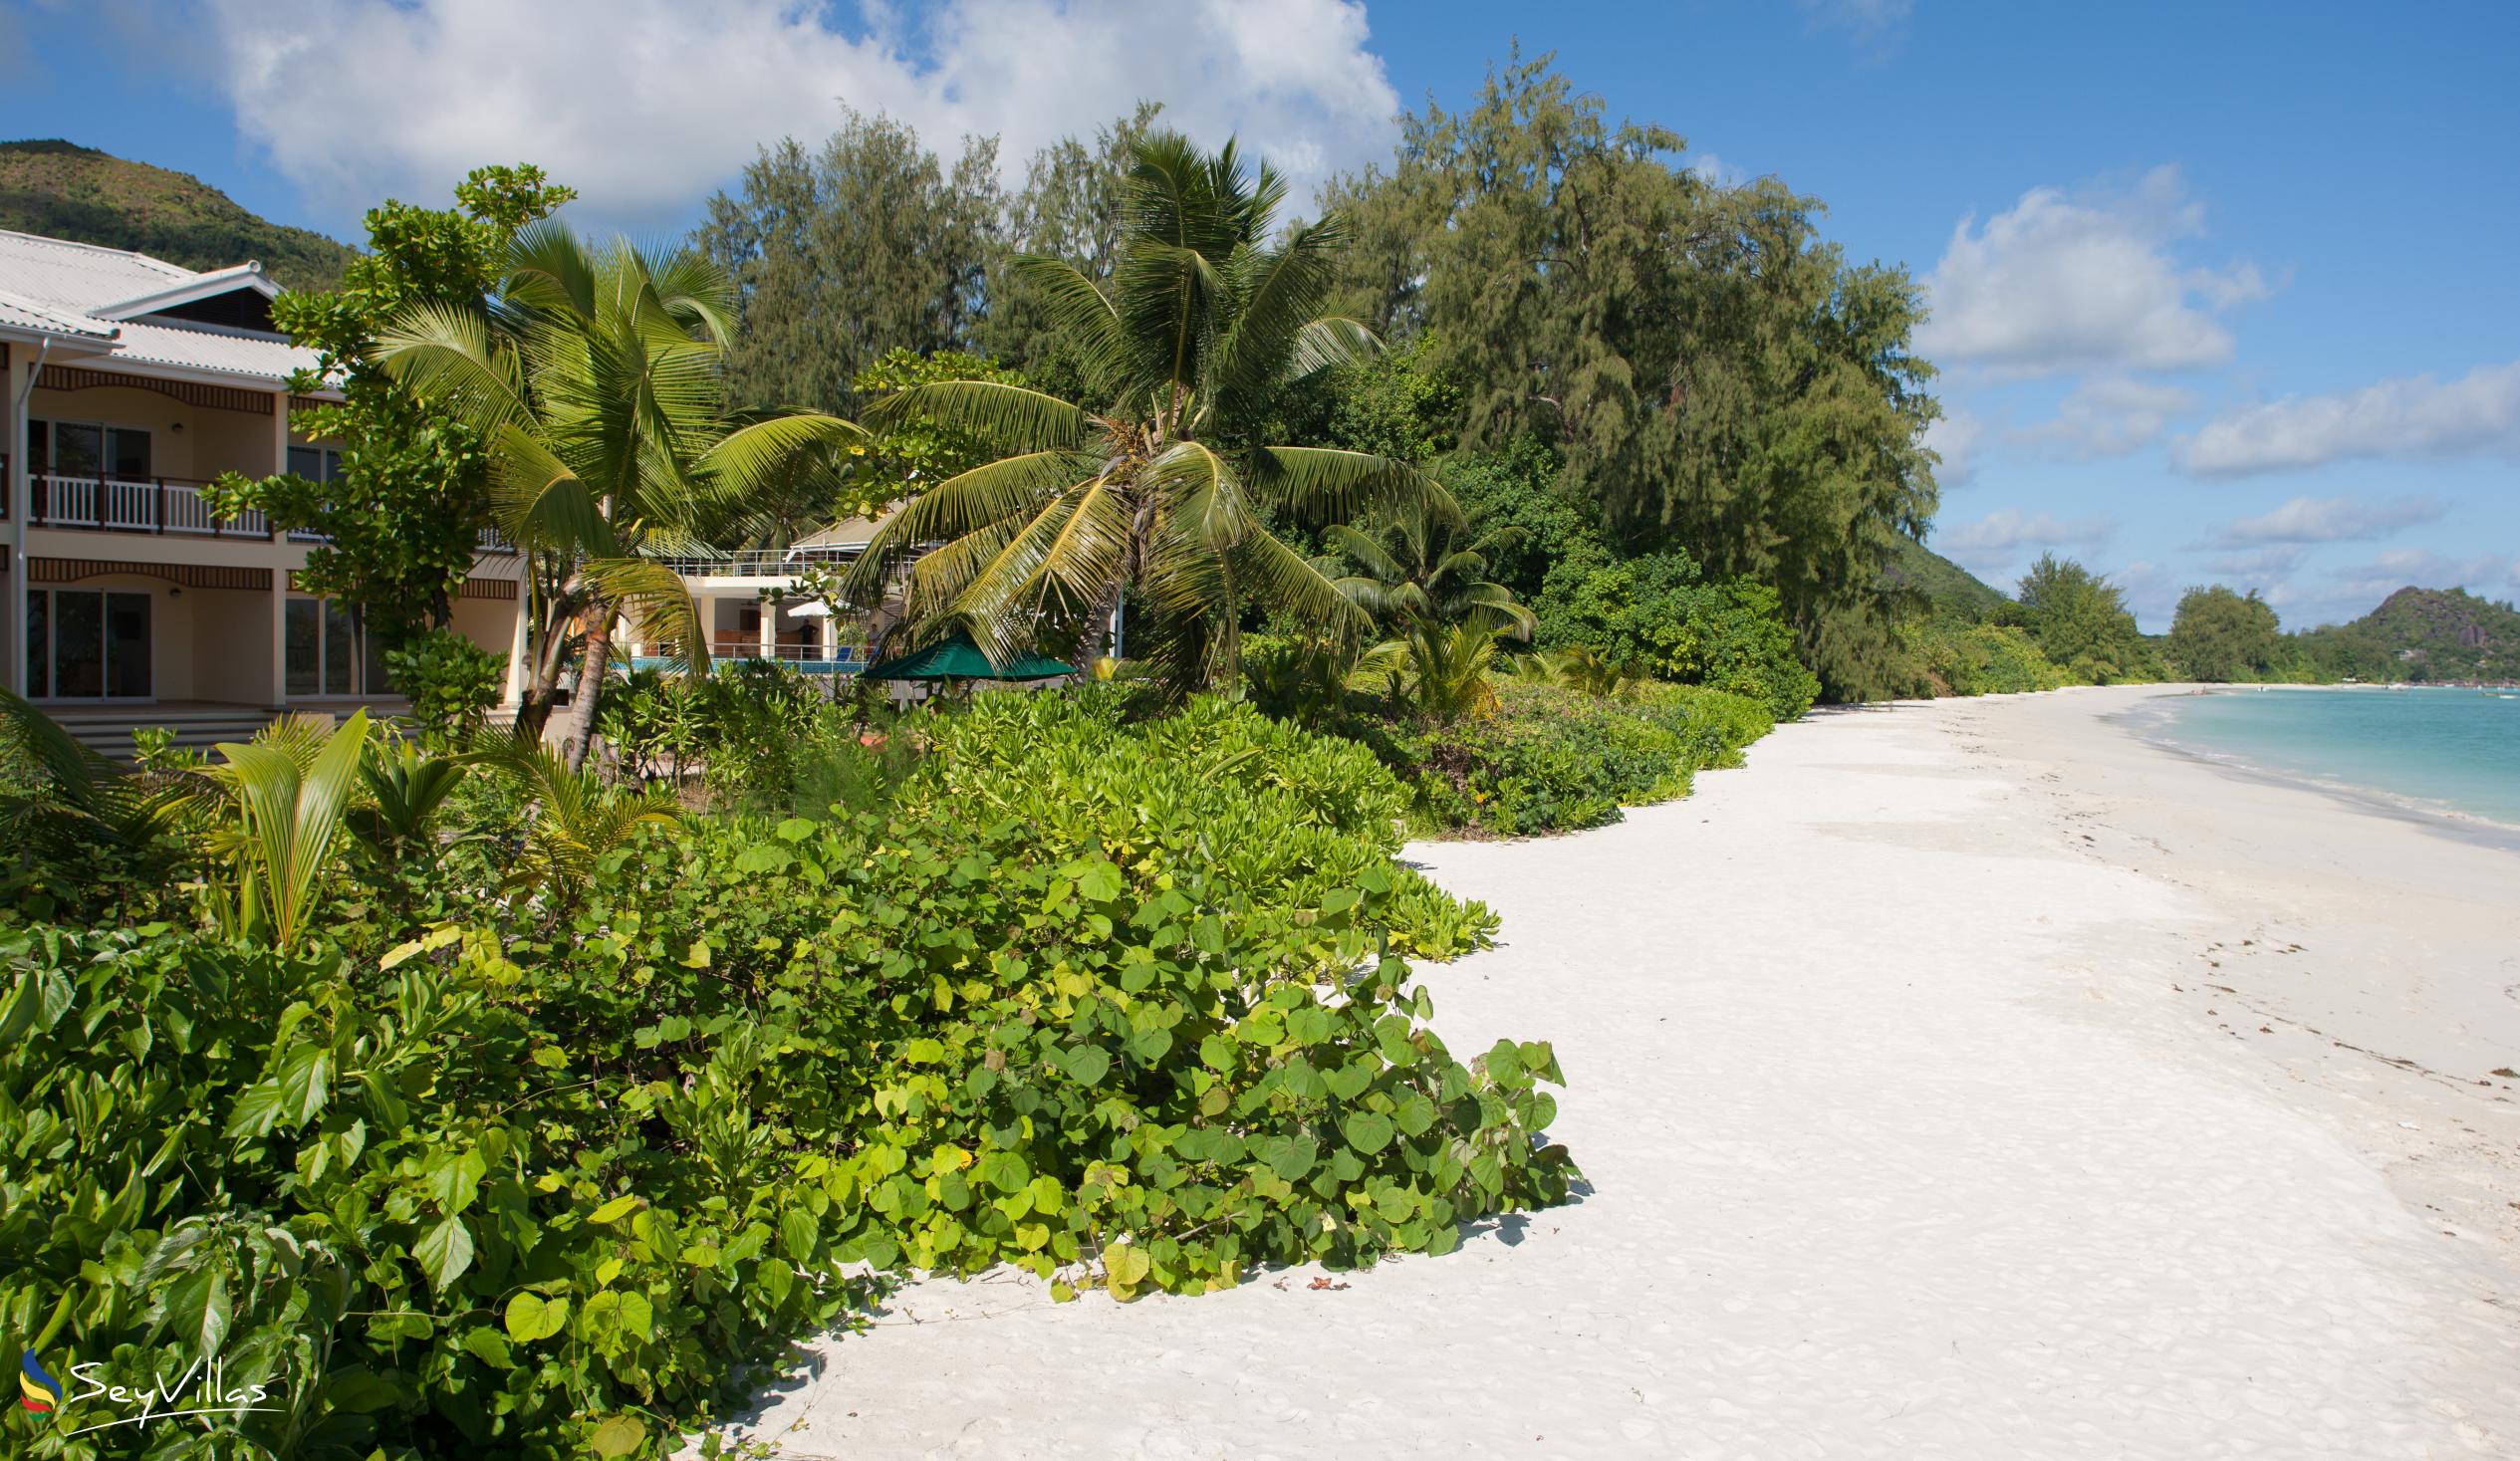 Photo 4: Acajou Beach Resort - Outdoor area - Praslin (Seychelles)